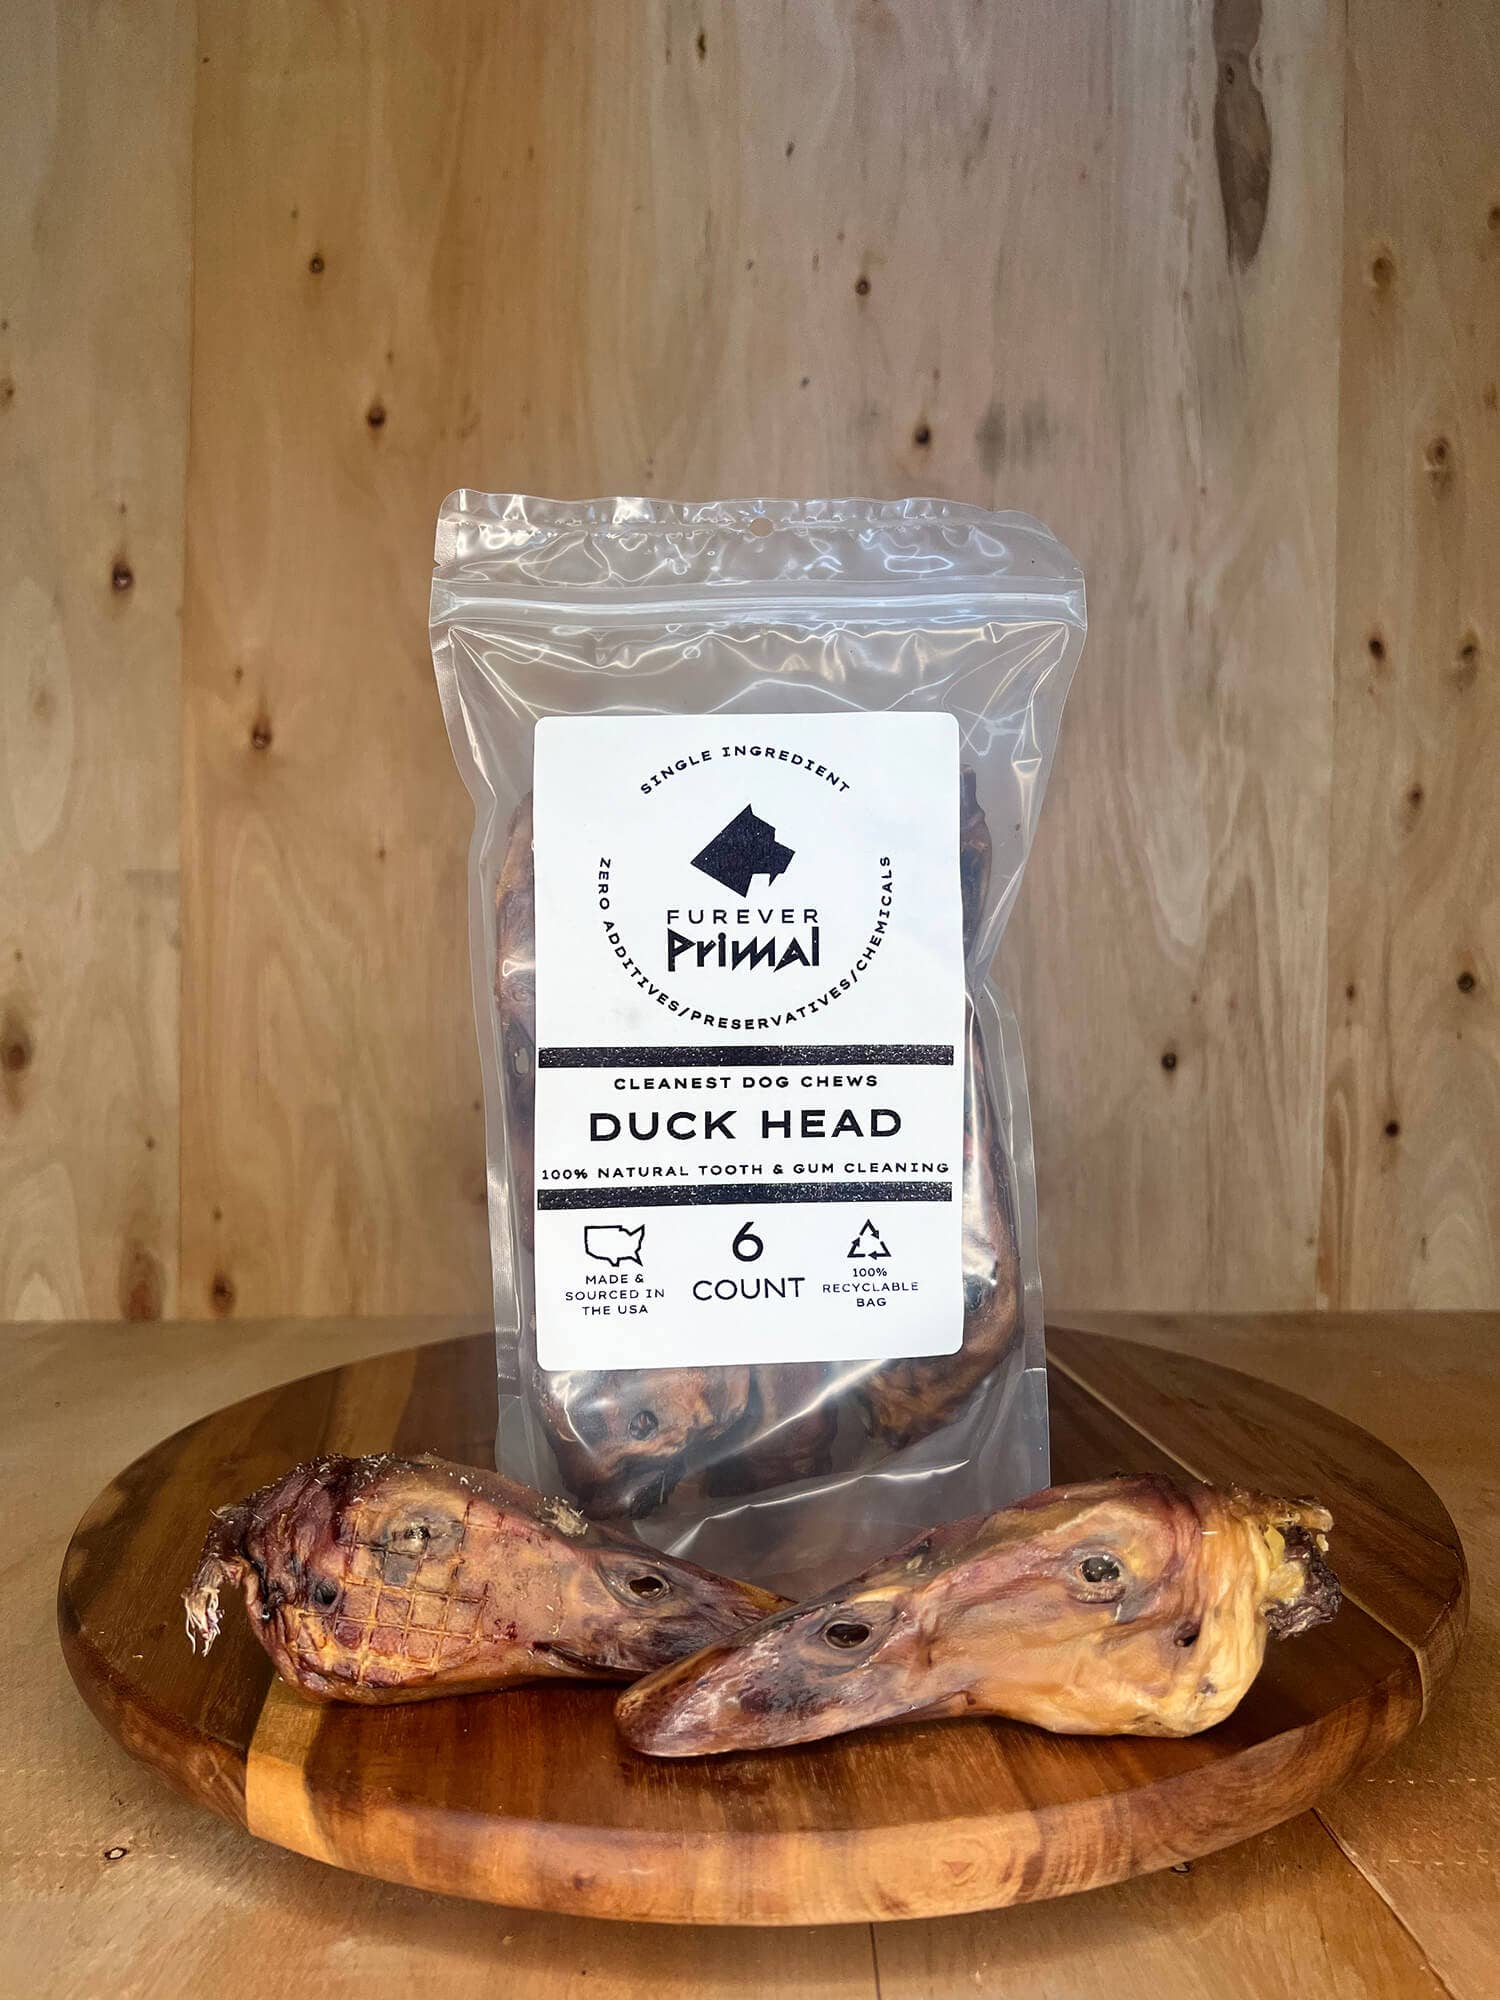 Furever Primal - Bagged Dog Chew: Duck Head - Natural Single Ingredient